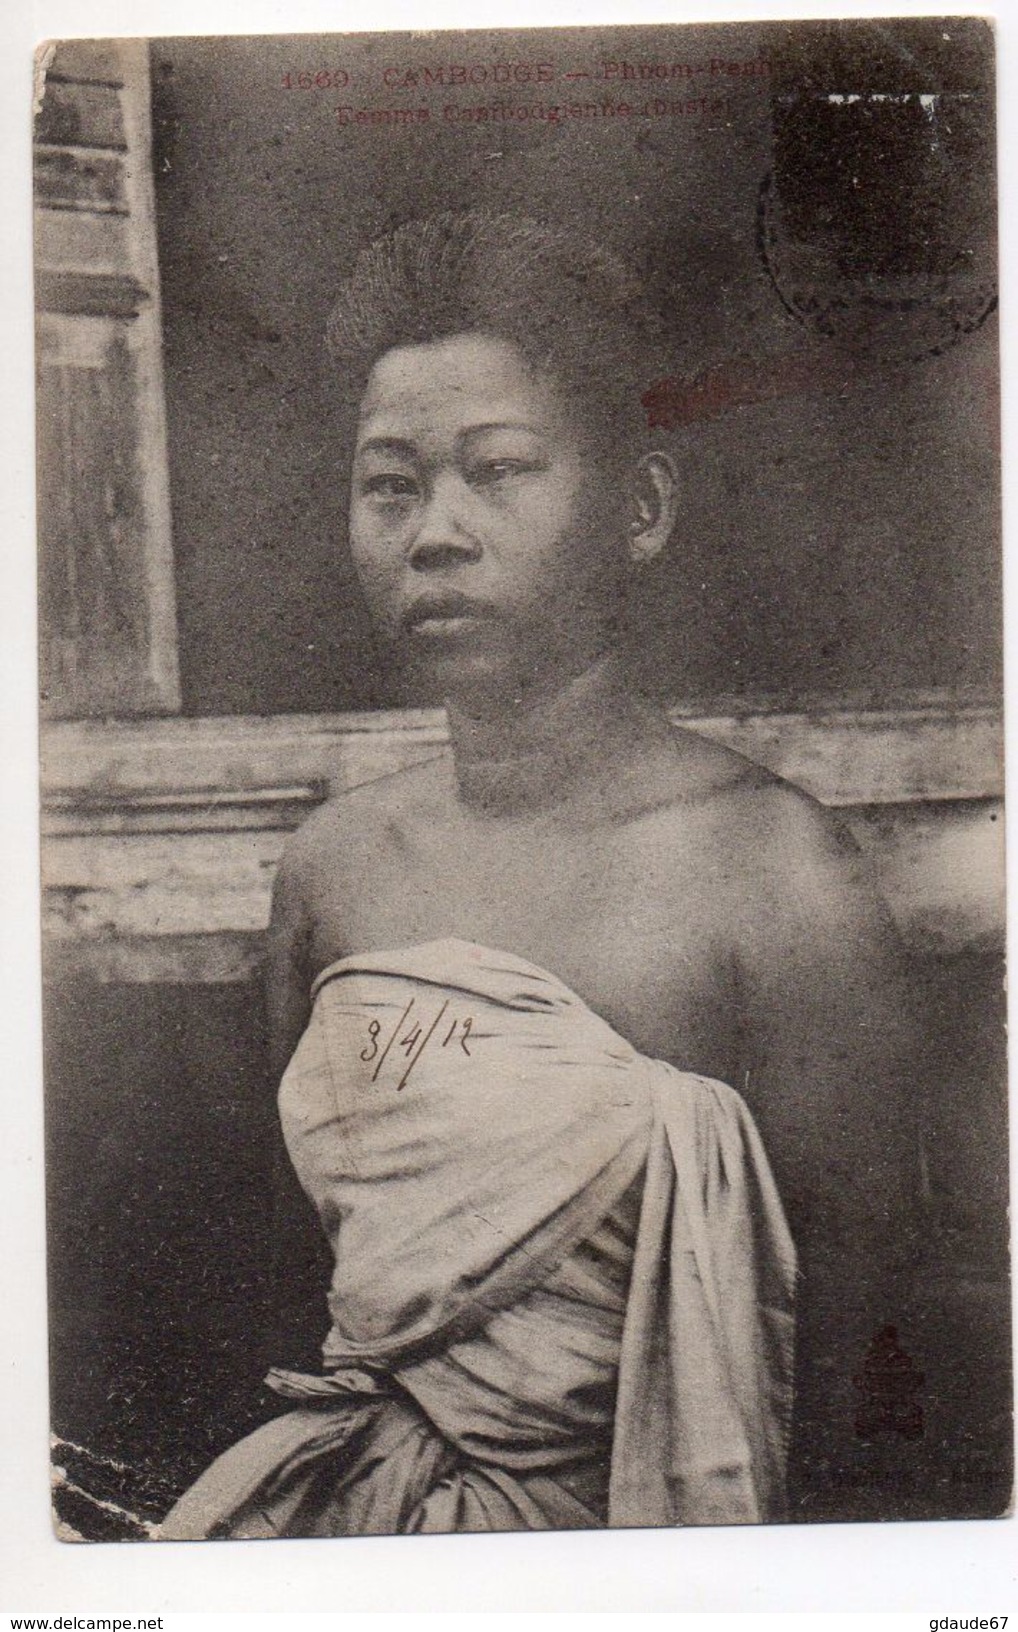 CAMBODGE - PHNOM PENH - FEMME CAMBODGIENNE (BUSTE) - Cambogia